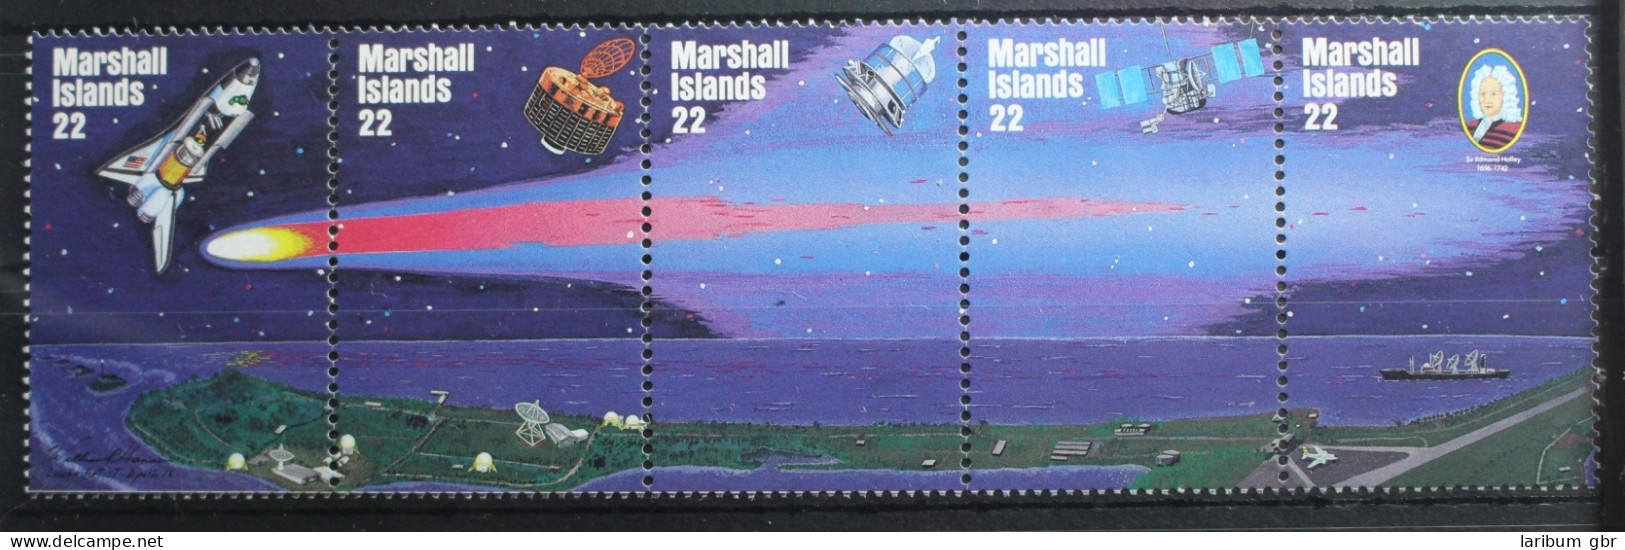 Marshall-Inseln 62-66 Postfrisch #SH493 - Marshall